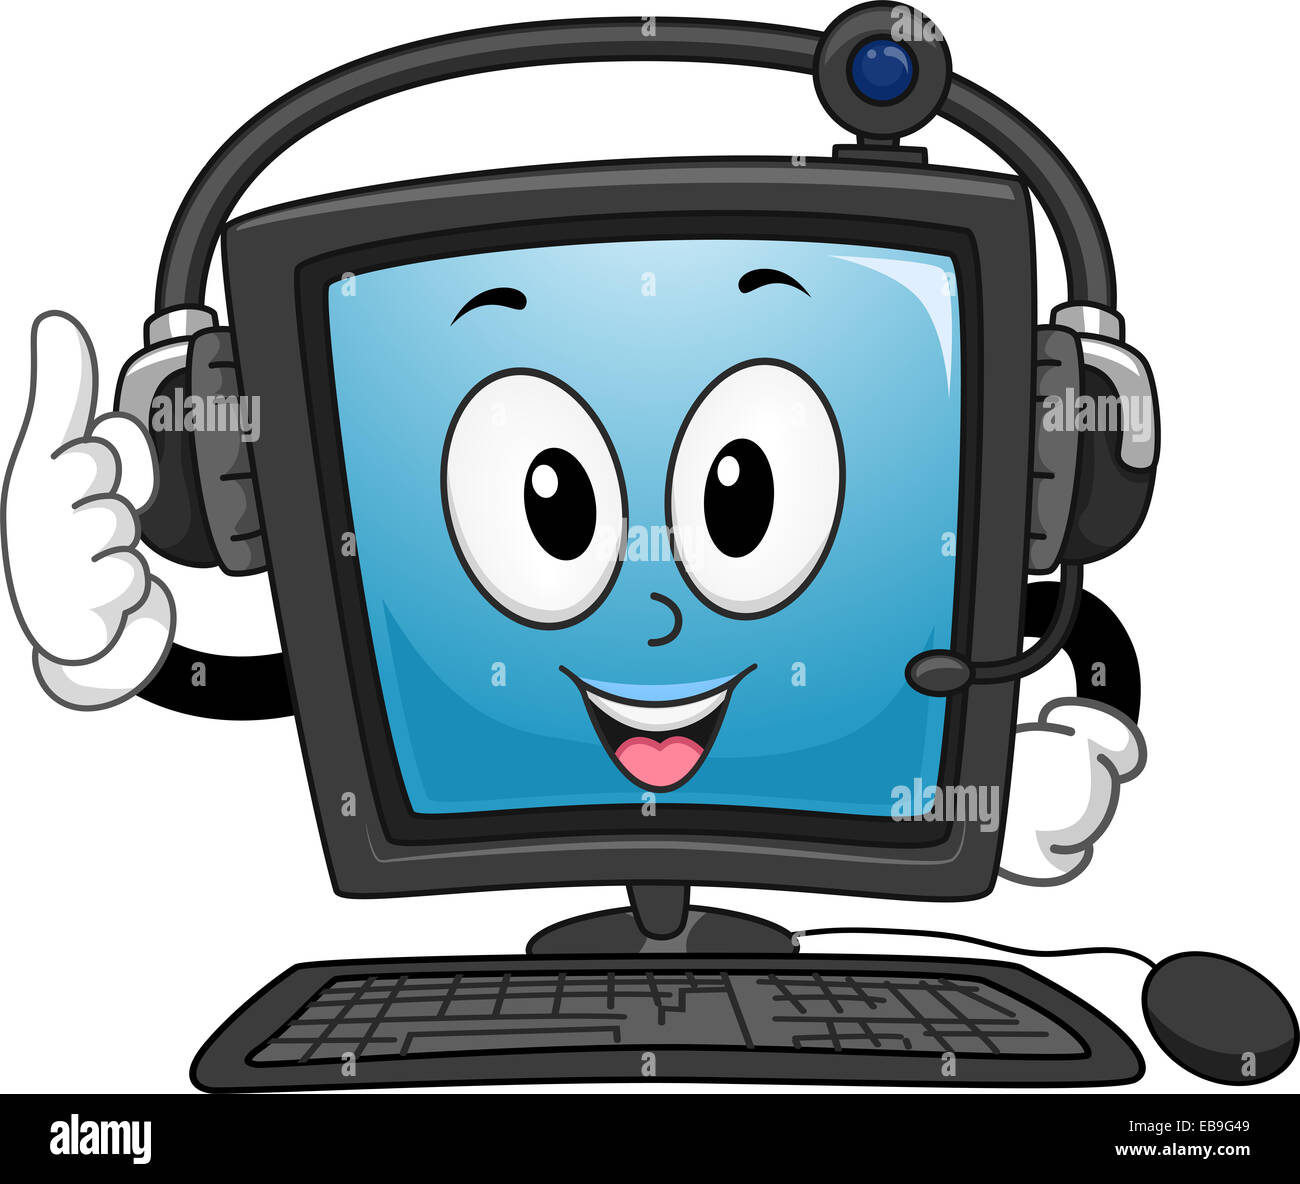 Mascot Illustration de l'écran d'un ordinateur le port d'un casque Banque D'Images